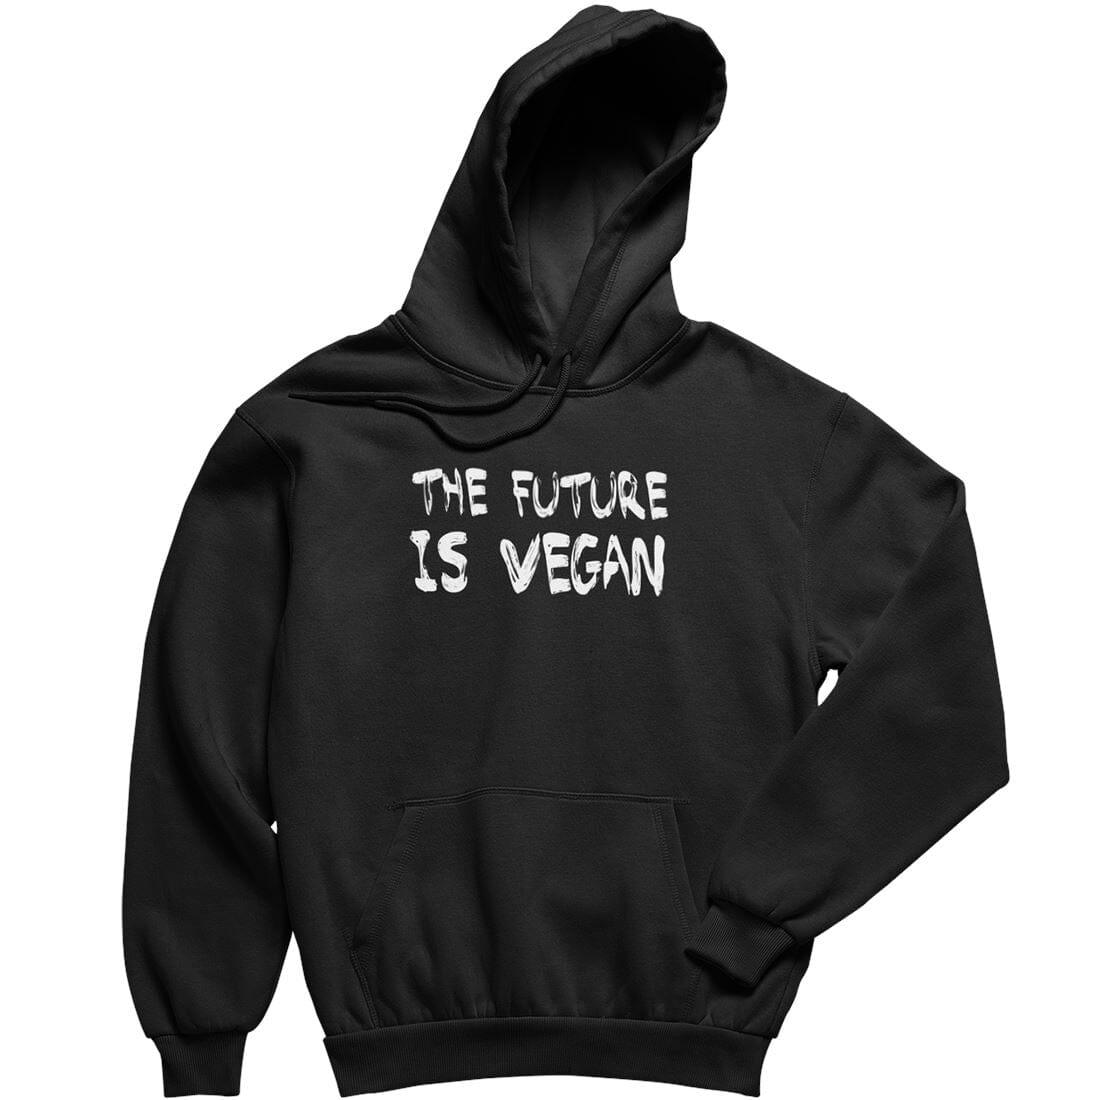 The future is vegan - Unisex Organic Hoodie - M - Team Vegan © vegan t shirt